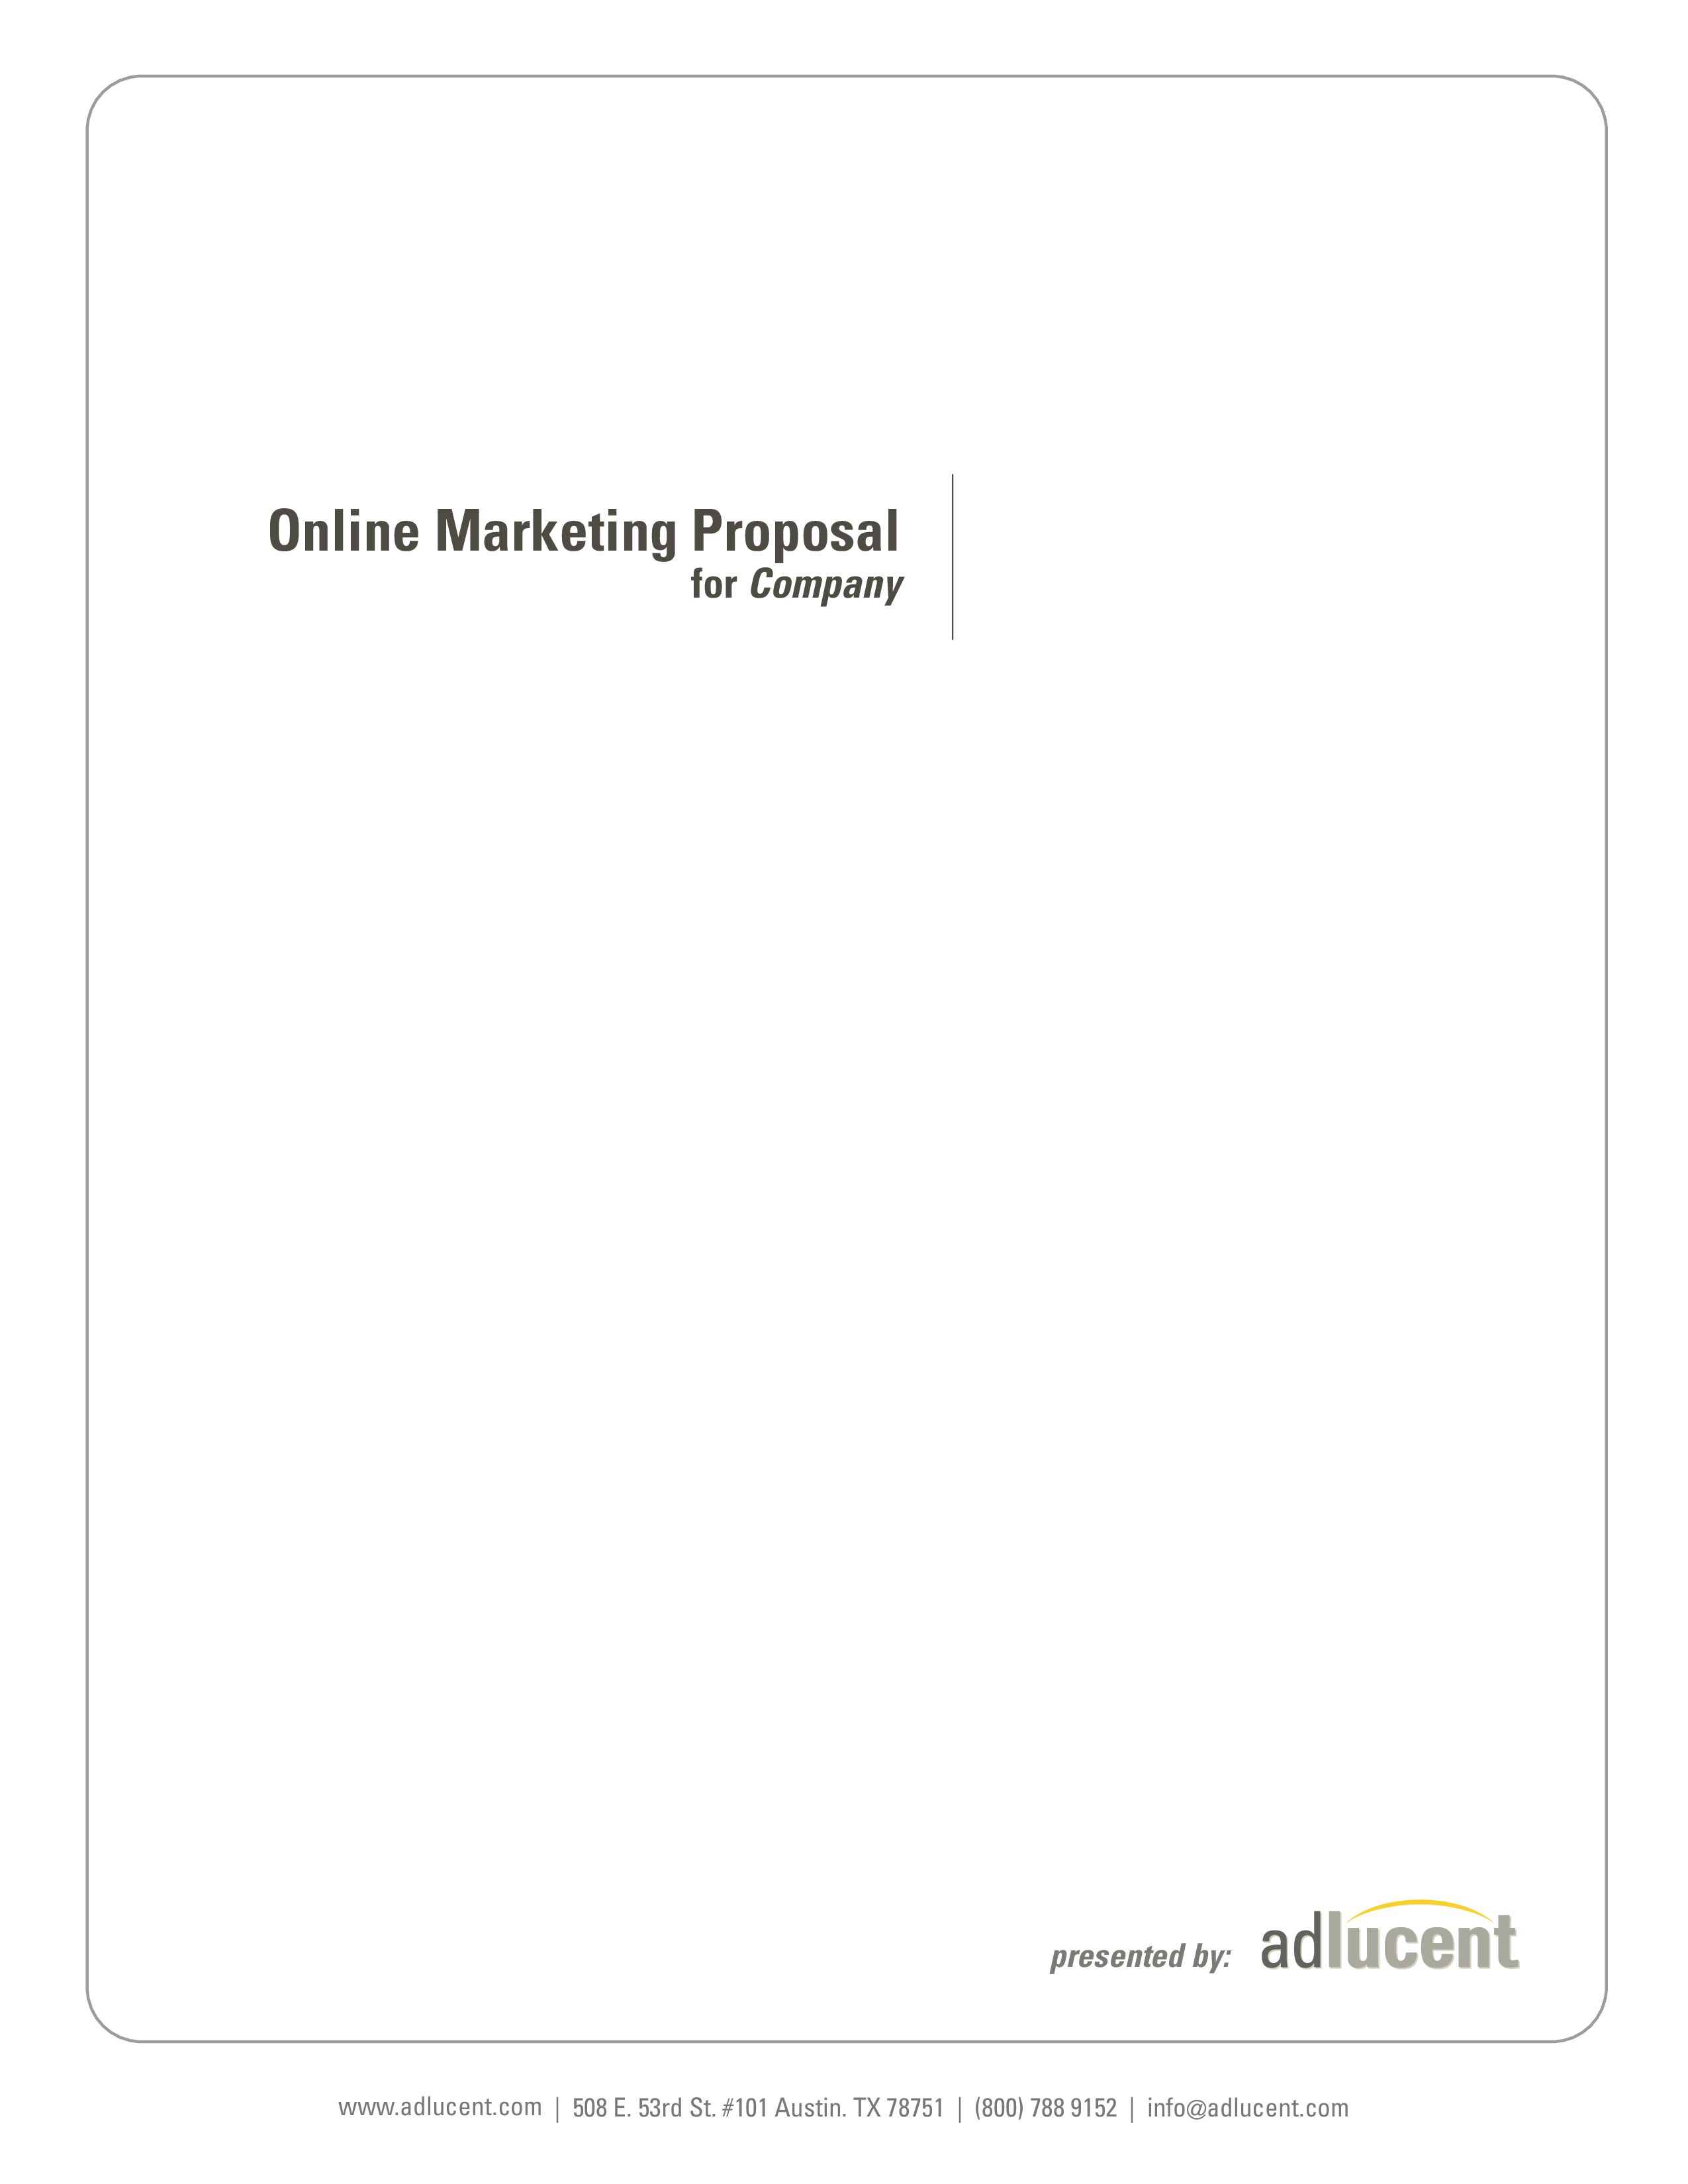 Online Marketing Proposal main image